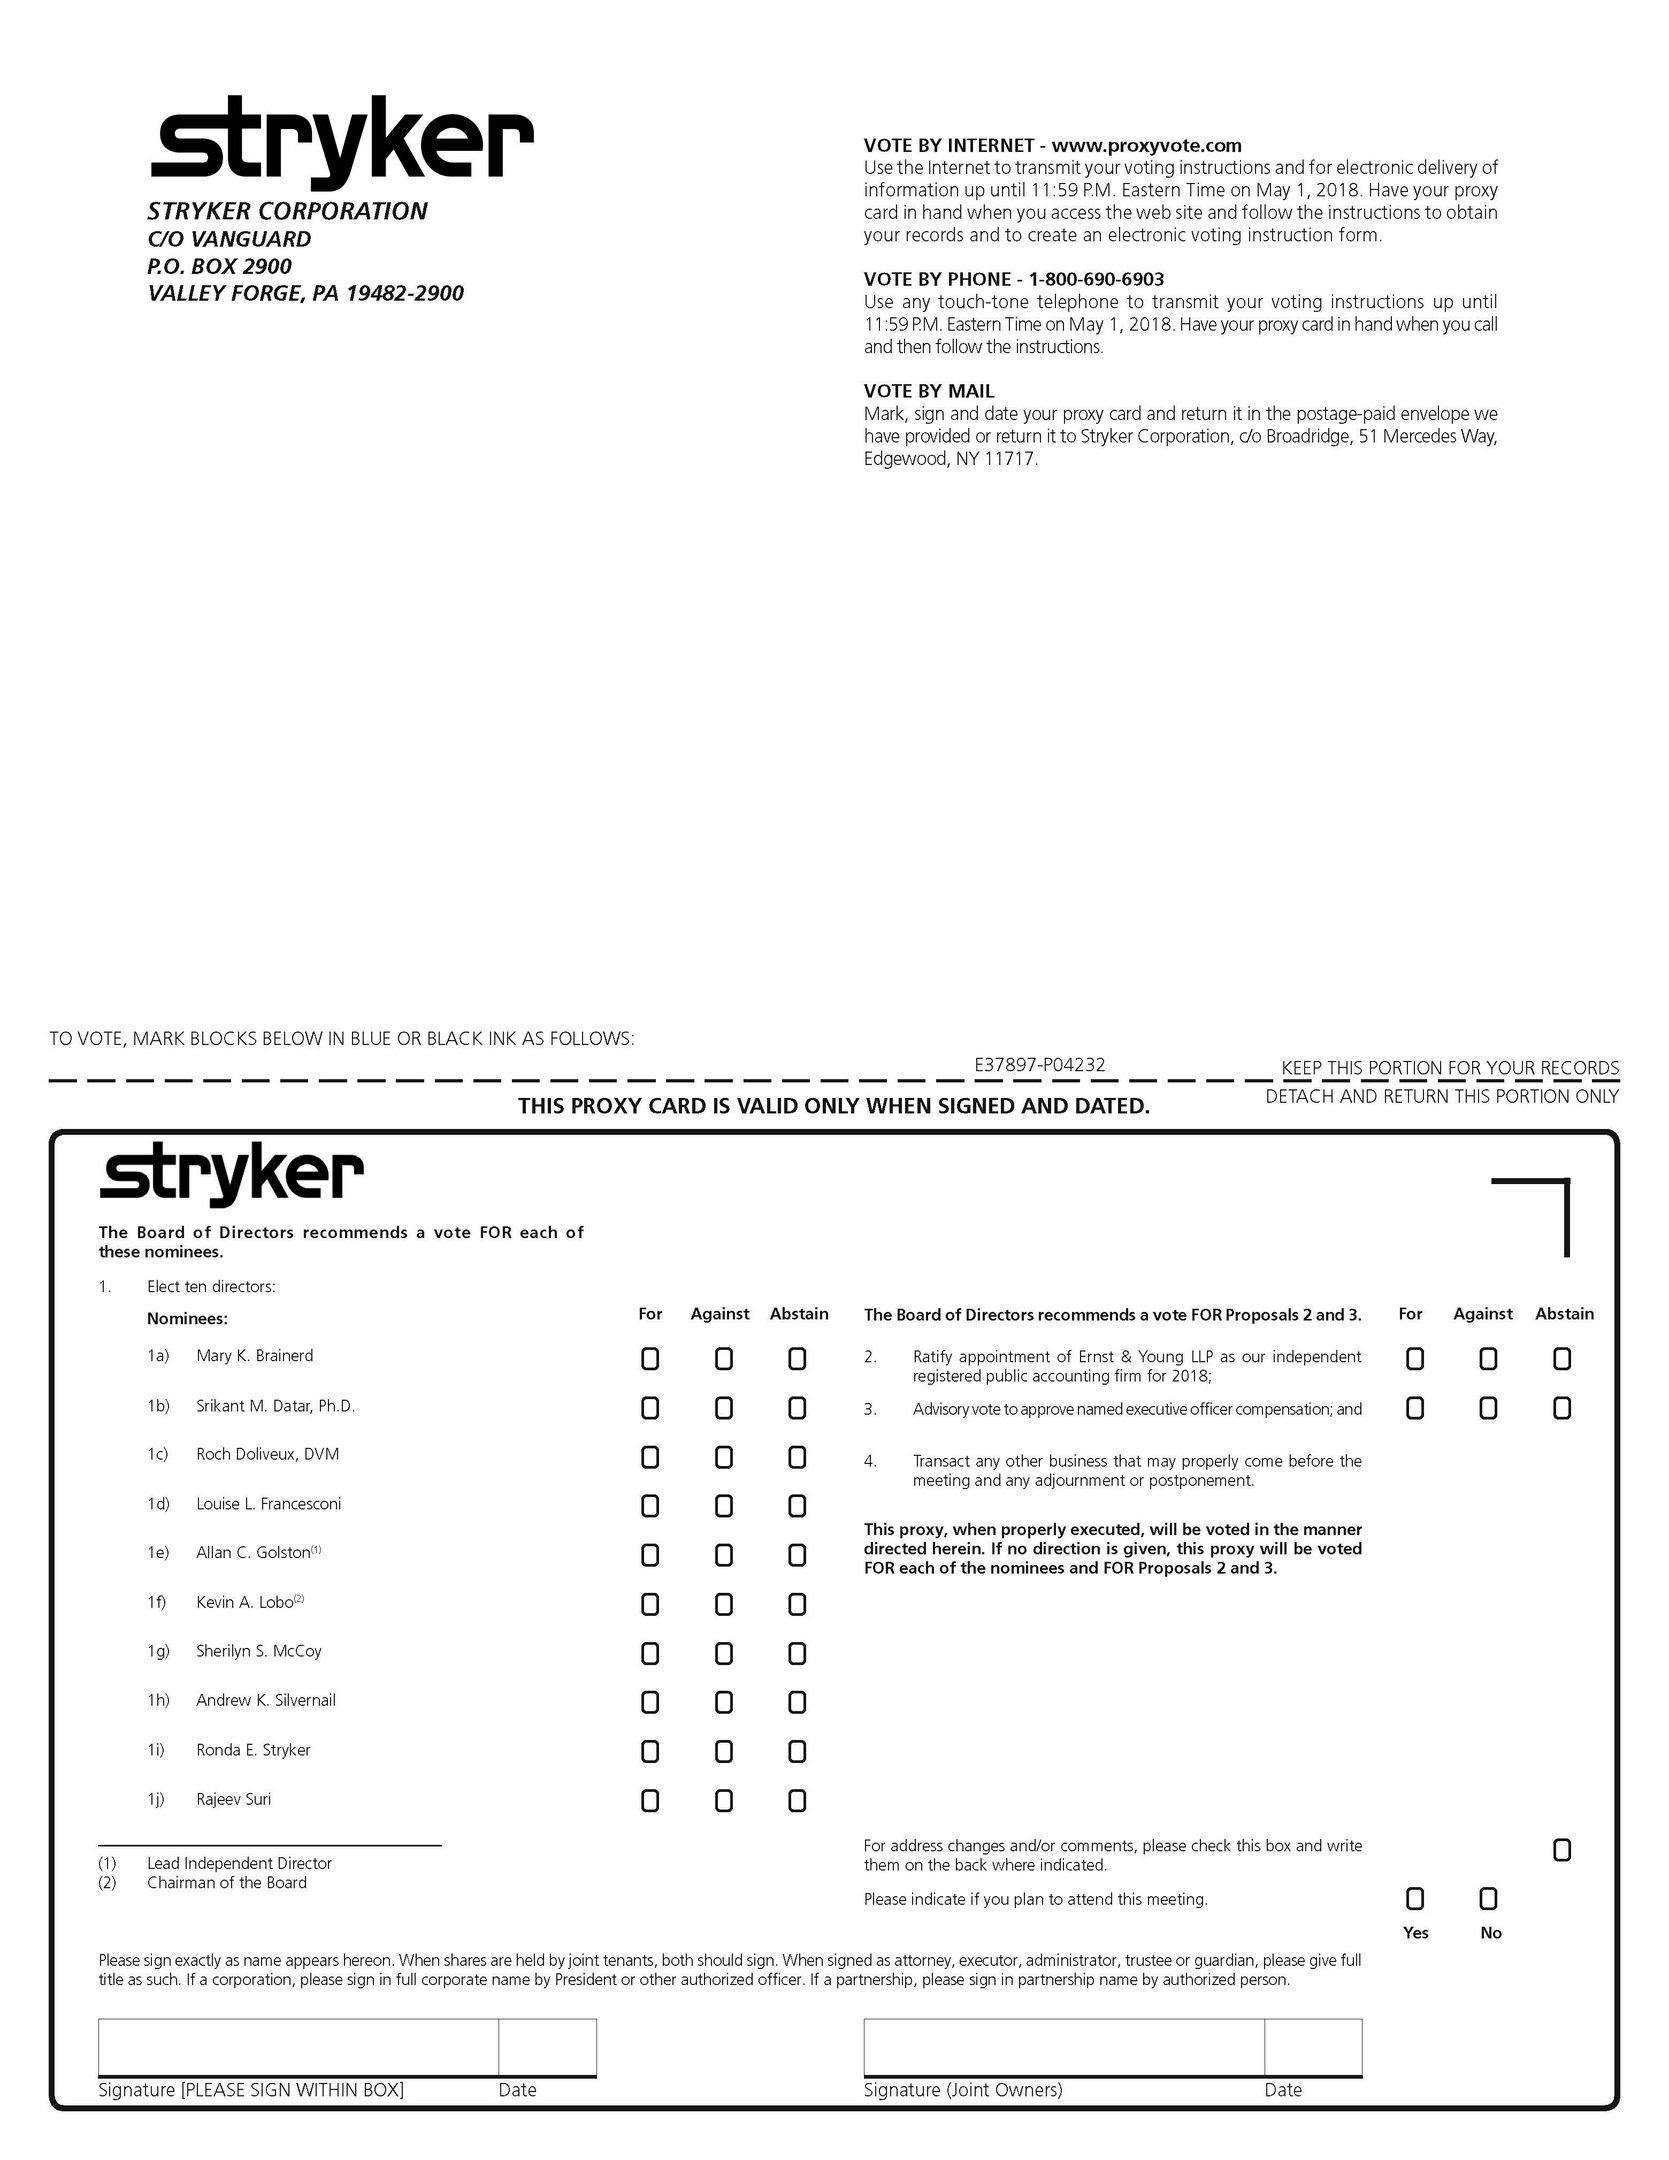 sykproxycard5.jpg